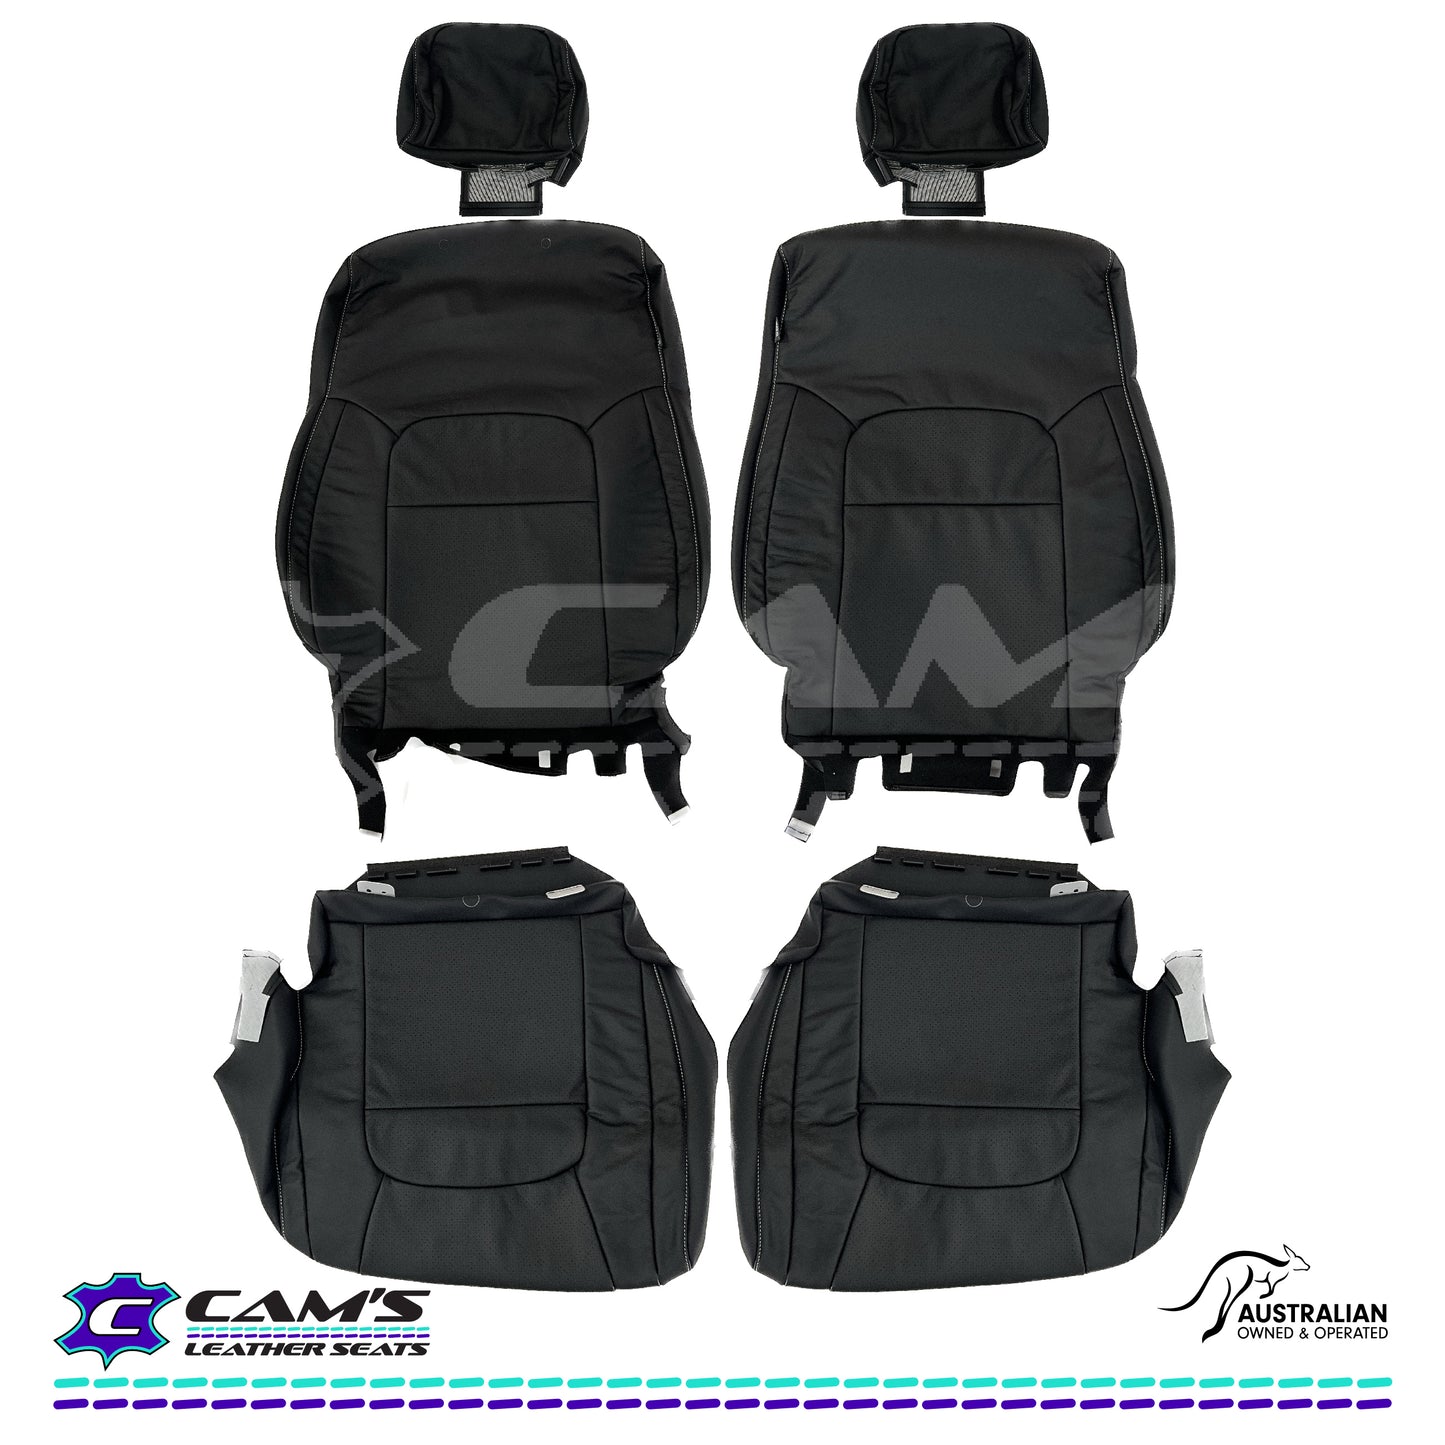 LEATHER SEATS SKINS TRIM KIT FOR TOYOTA LANDCRUISER 200 SERIES VX OR SAHARA 2 SEATS BLACK